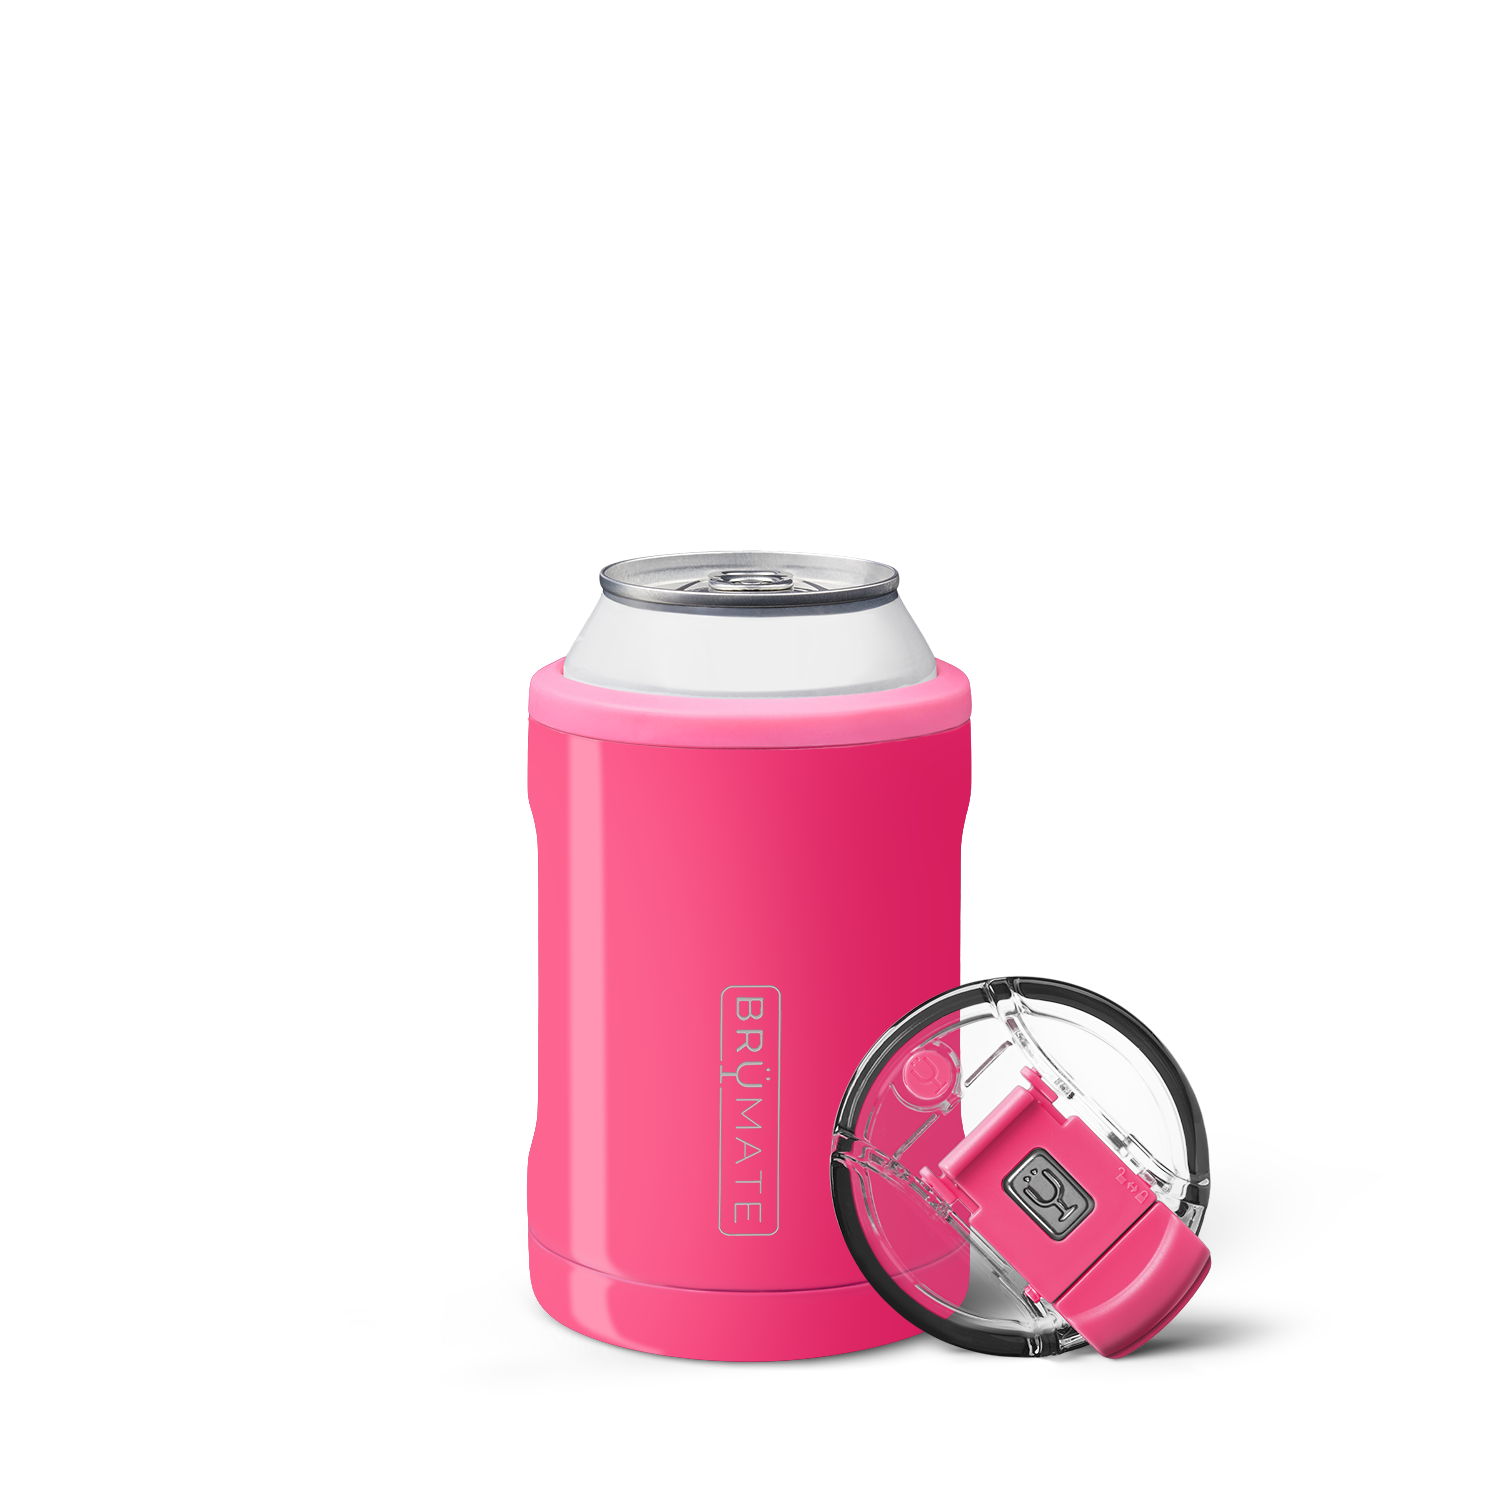 Brumate HOPSULATOR SLIM  Neon Pink (12OZ SLIM CANS) – Shabby Chic